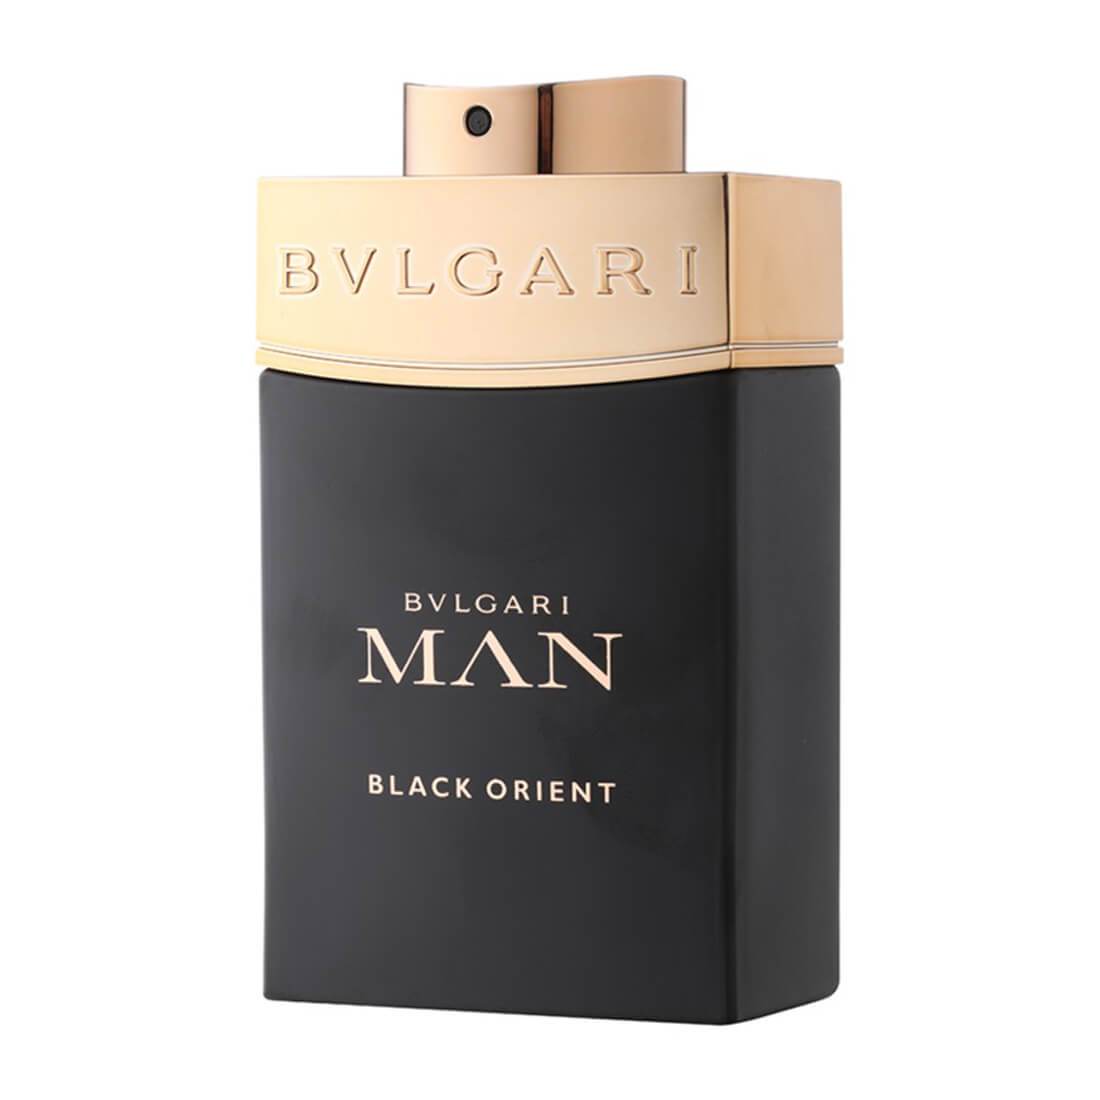 Bvlgari Man in Black Orient EDP Perfume - 100ml